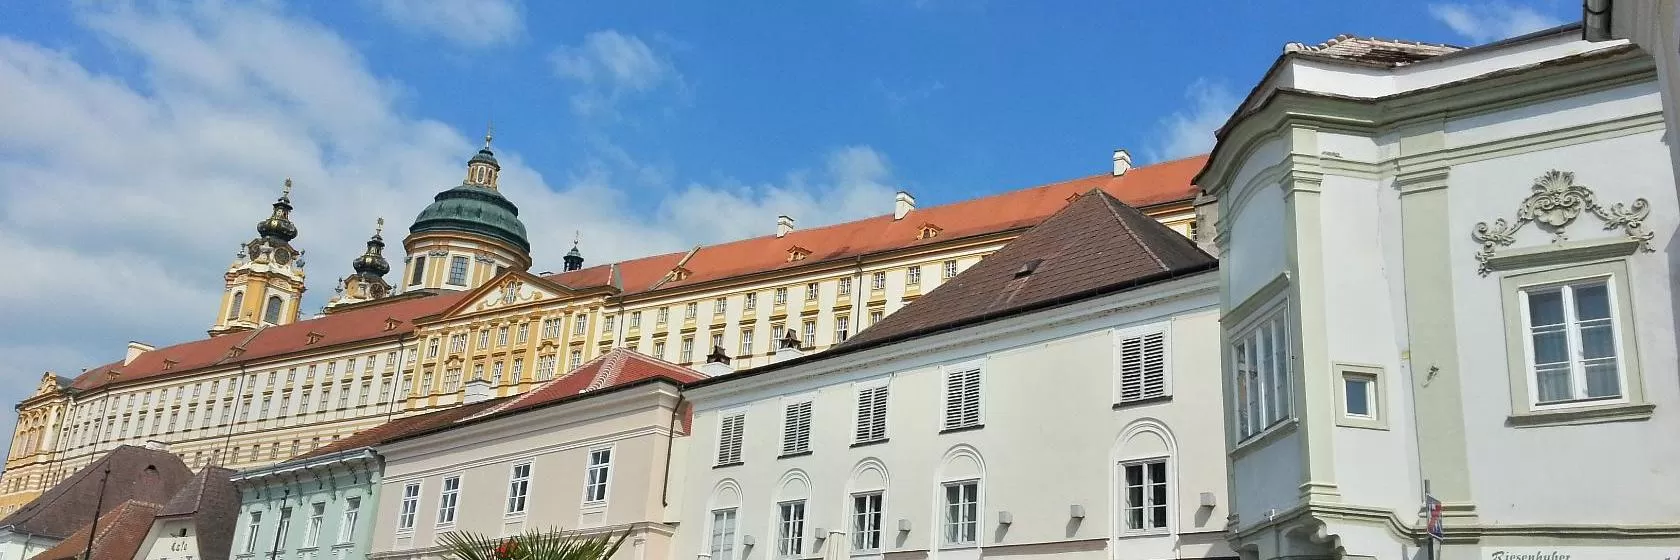 Melk, Lower Austria Hotels & Accommodation